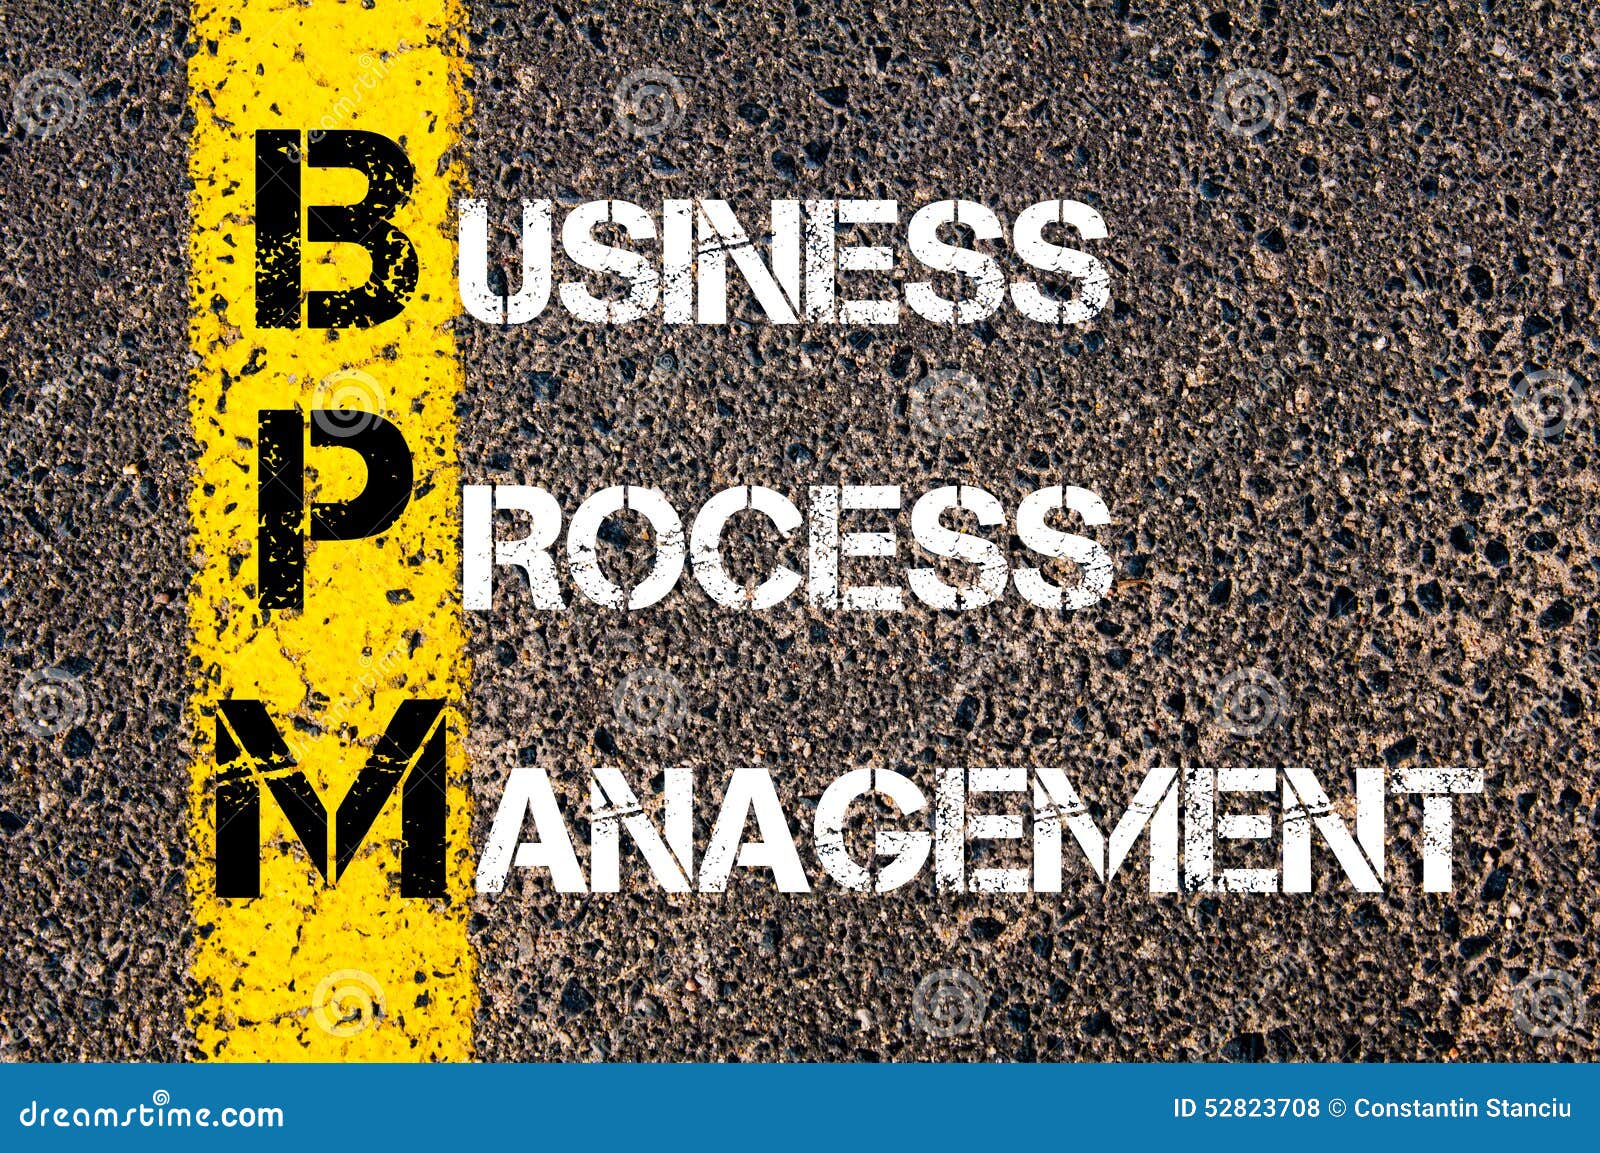 acronym bpm - business process management